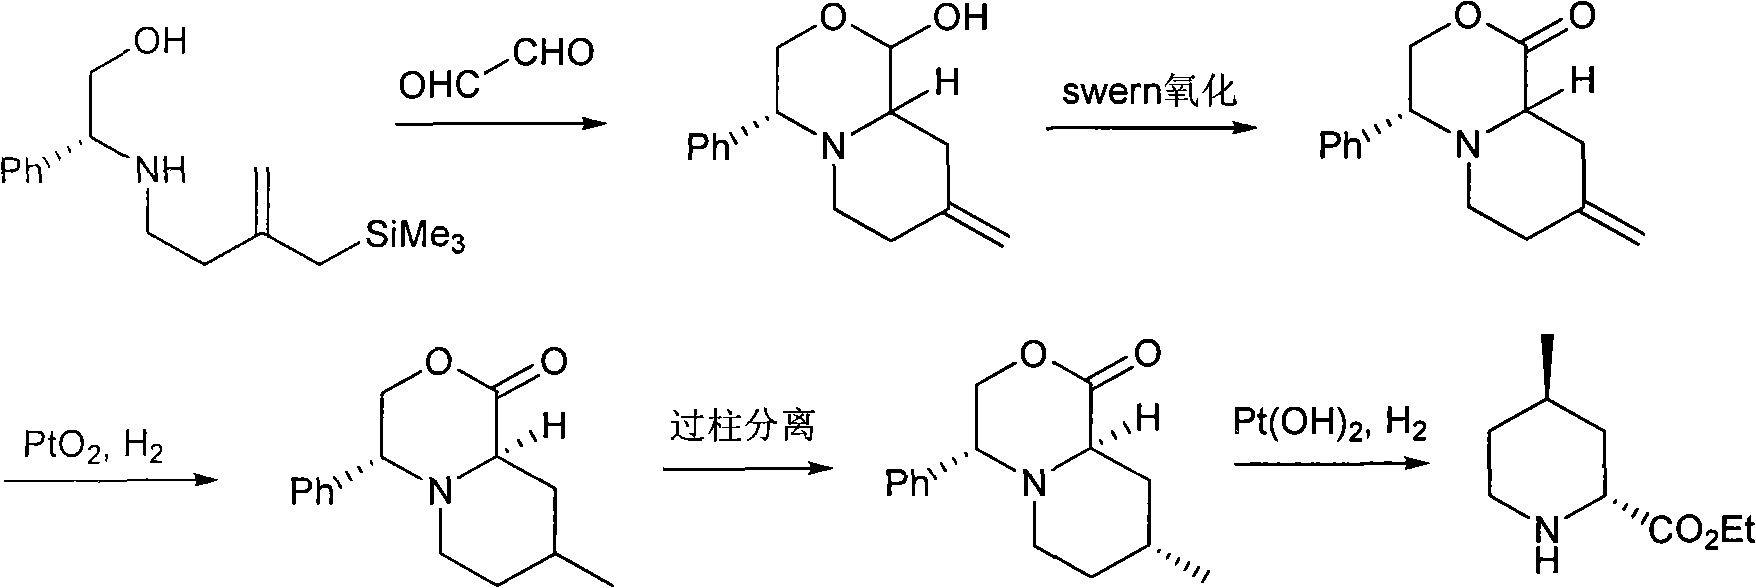 Method for preparing (2R,4R)-4-methyl-2-pipecolic acid